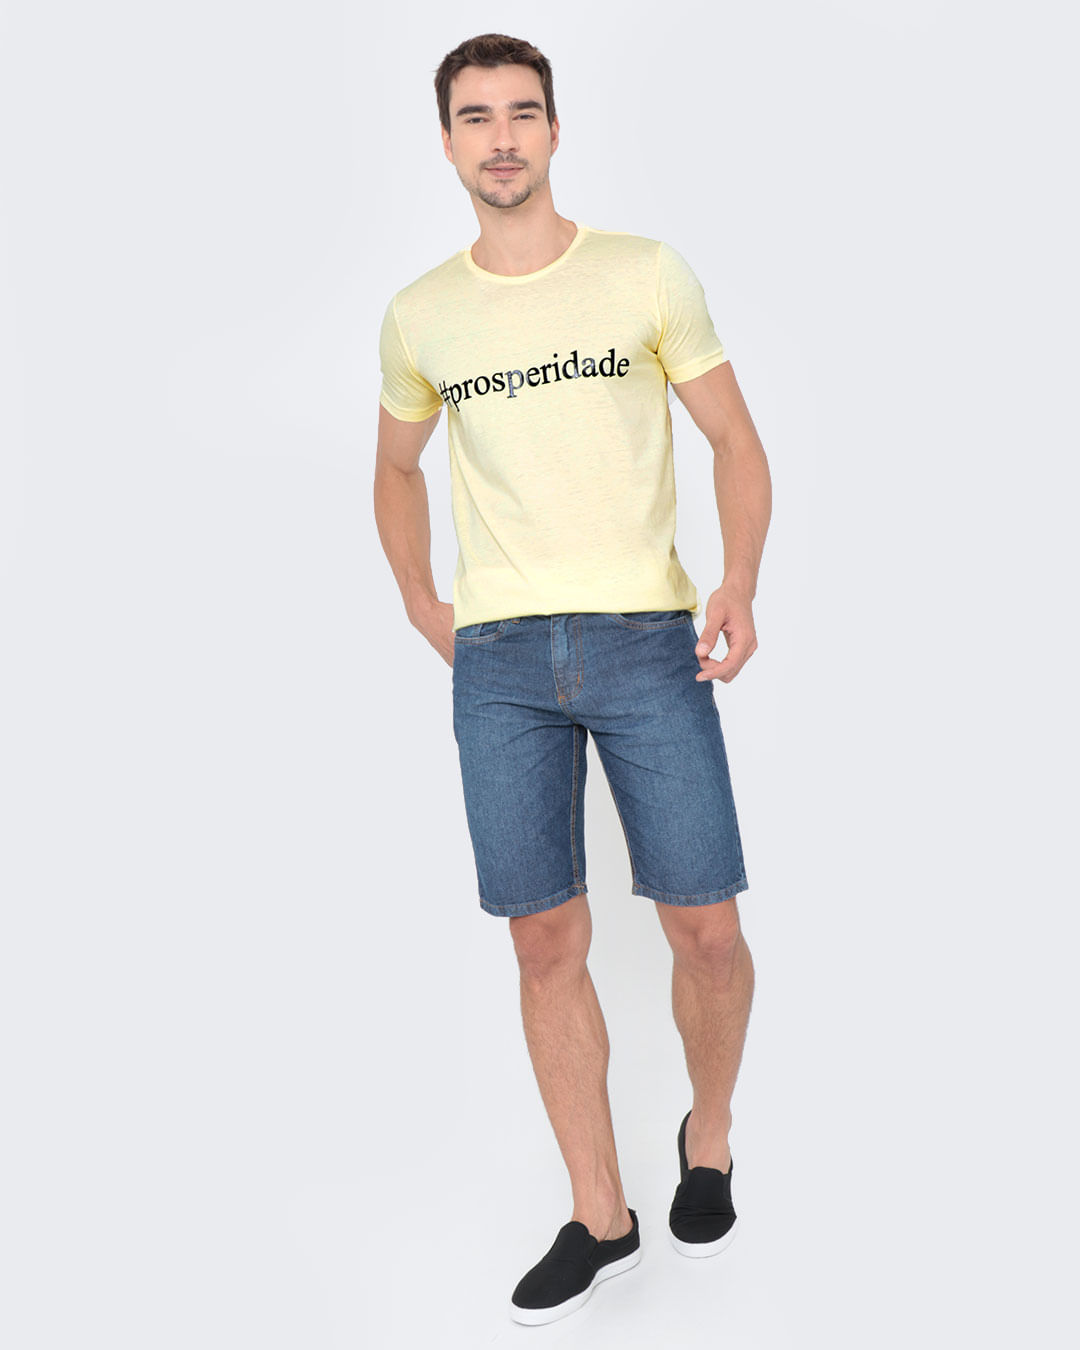 Camiseta-Estampa-Prosperidade-Amarela